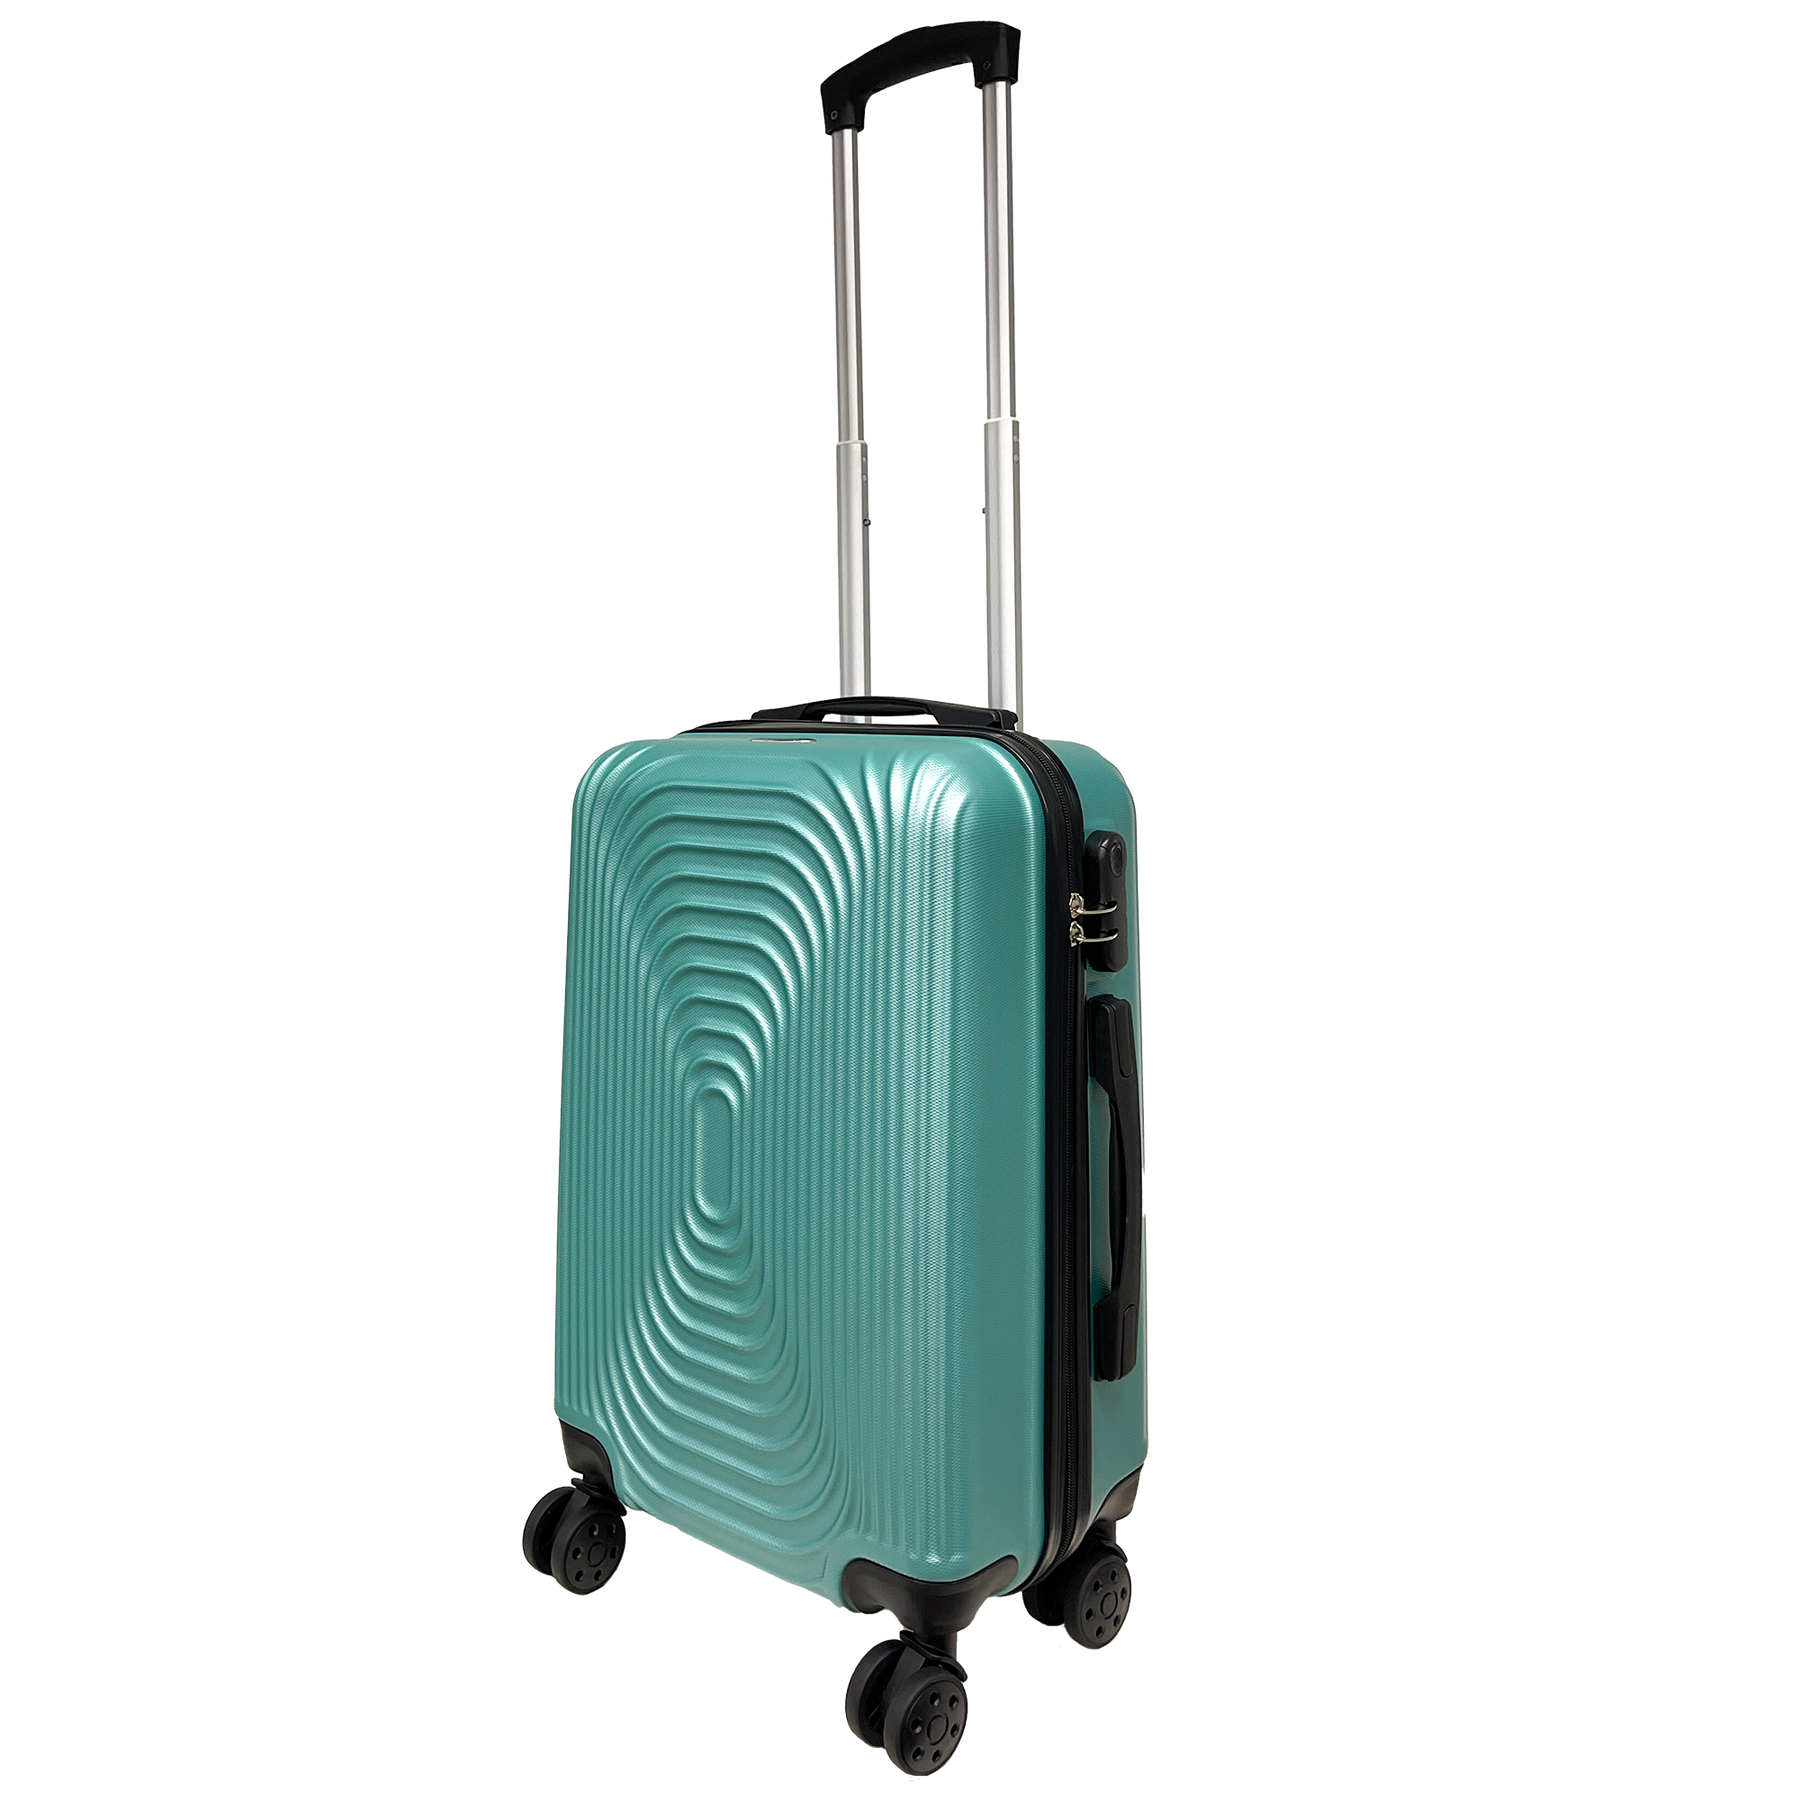 Ormi duoline large hand luggage rigid travel xxcm ultra light in